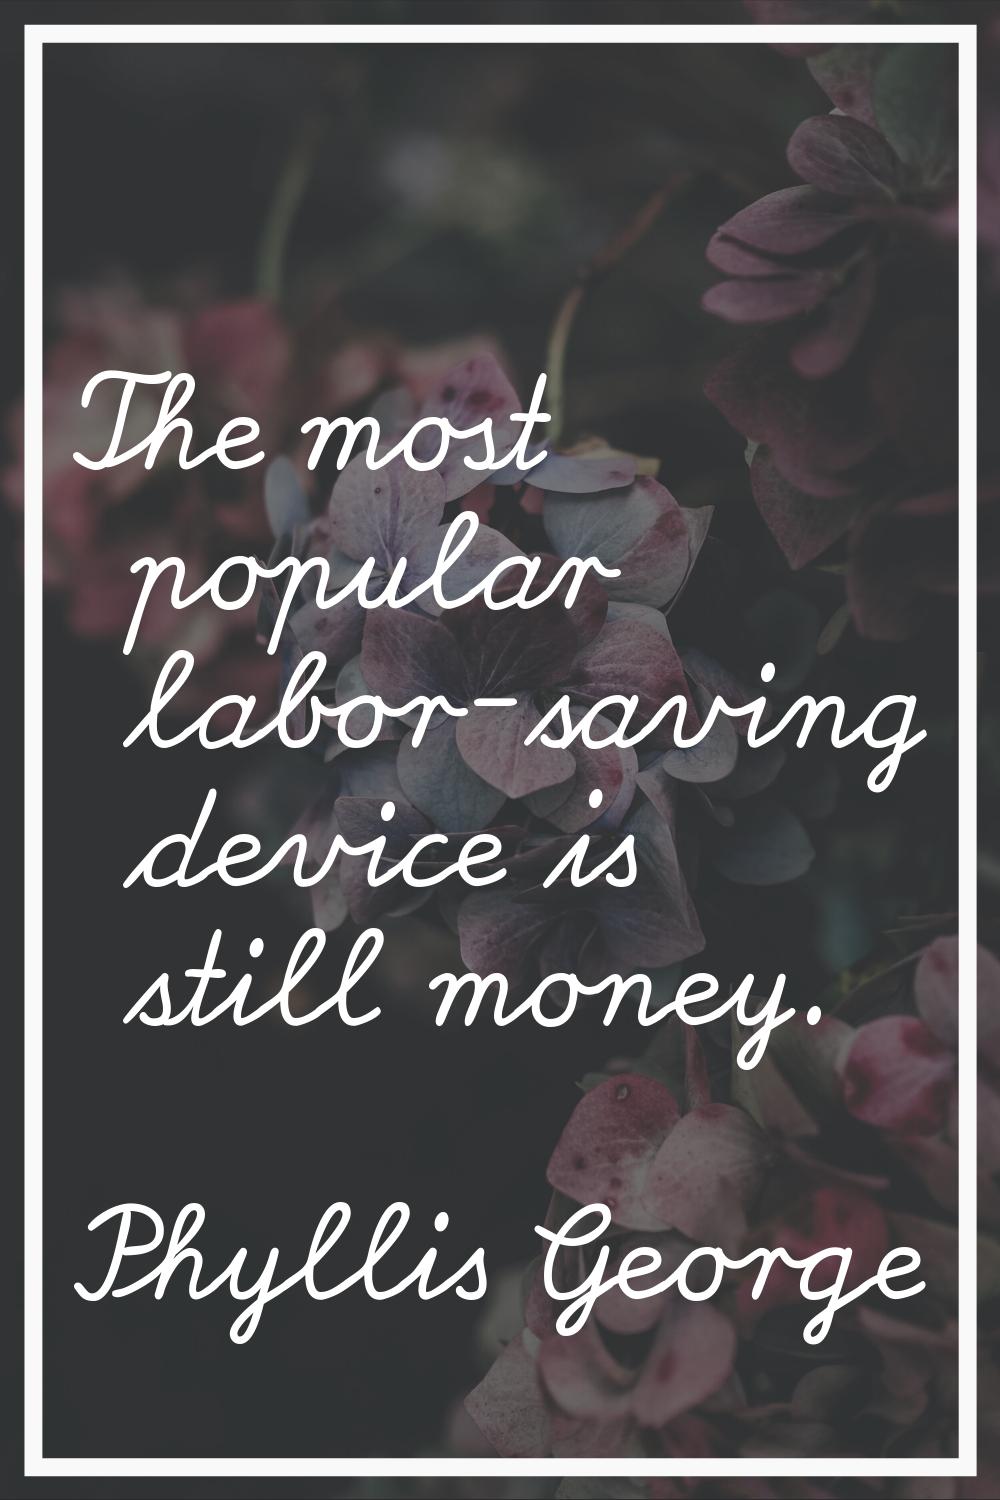 The most popular labor-saving device is still money.